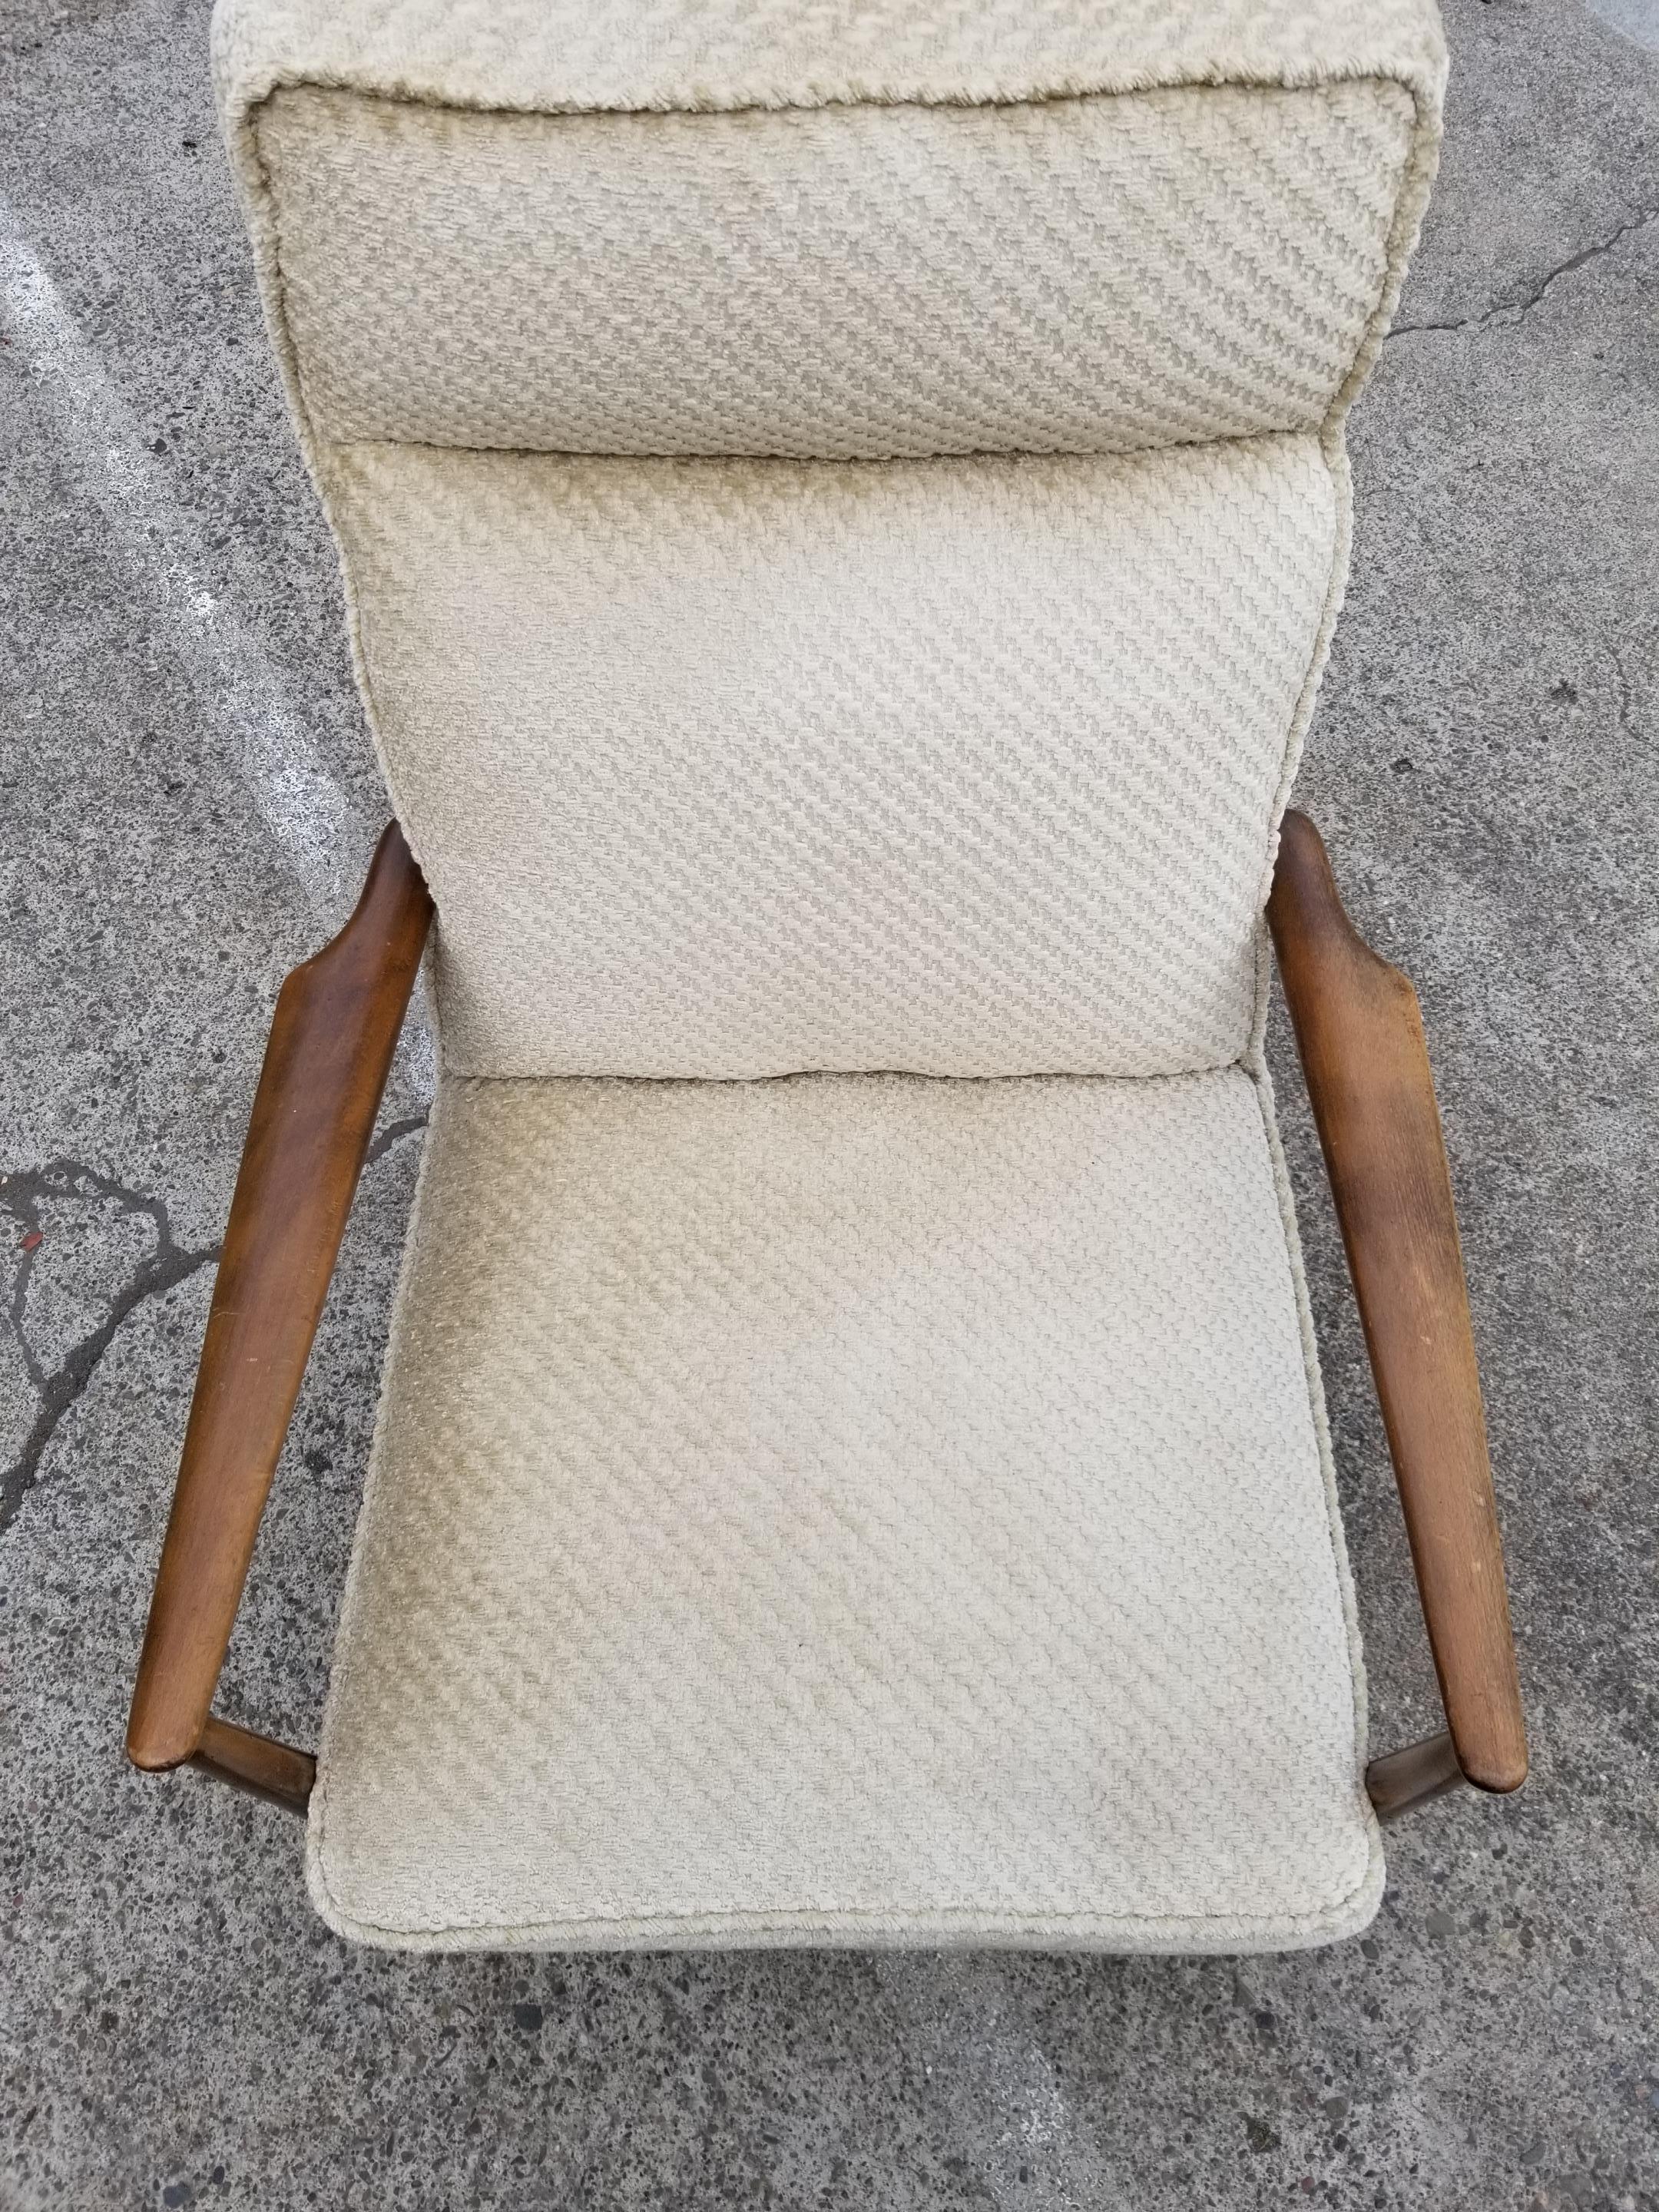 Ib Kofod-Larsen Danish Modern High Back Lounge Chair 2